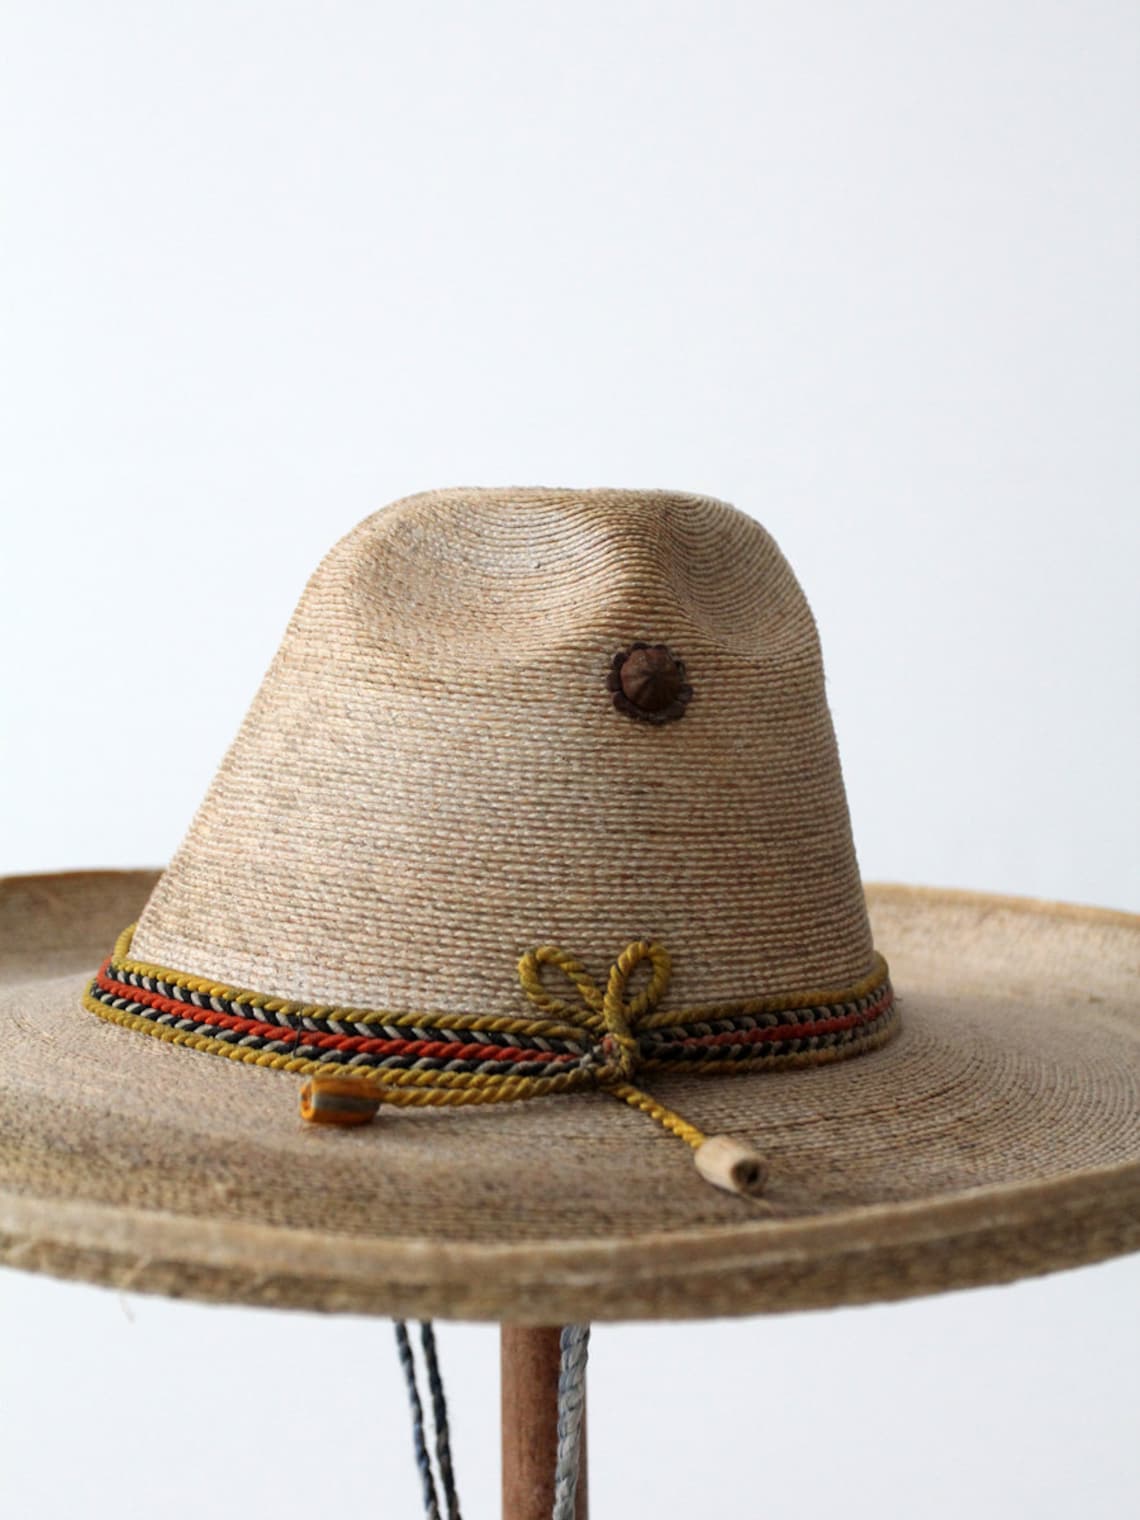 Vintage sombrero authentic Mexican hat | Etsy